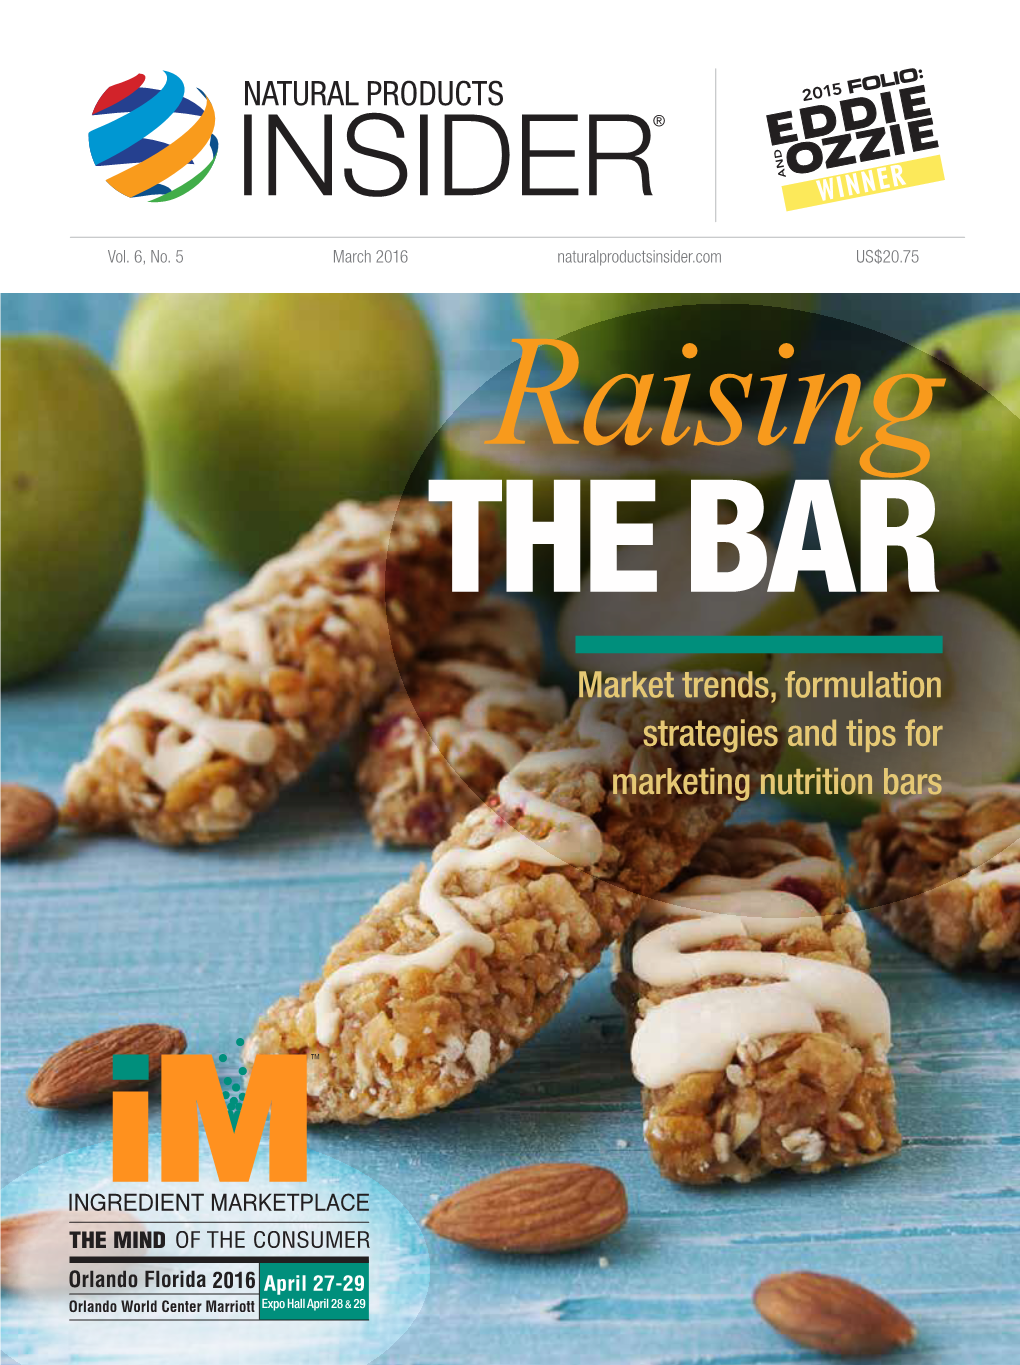 Market Trends, Formulation Strategies and Tips for Marketing Nutrition Bars